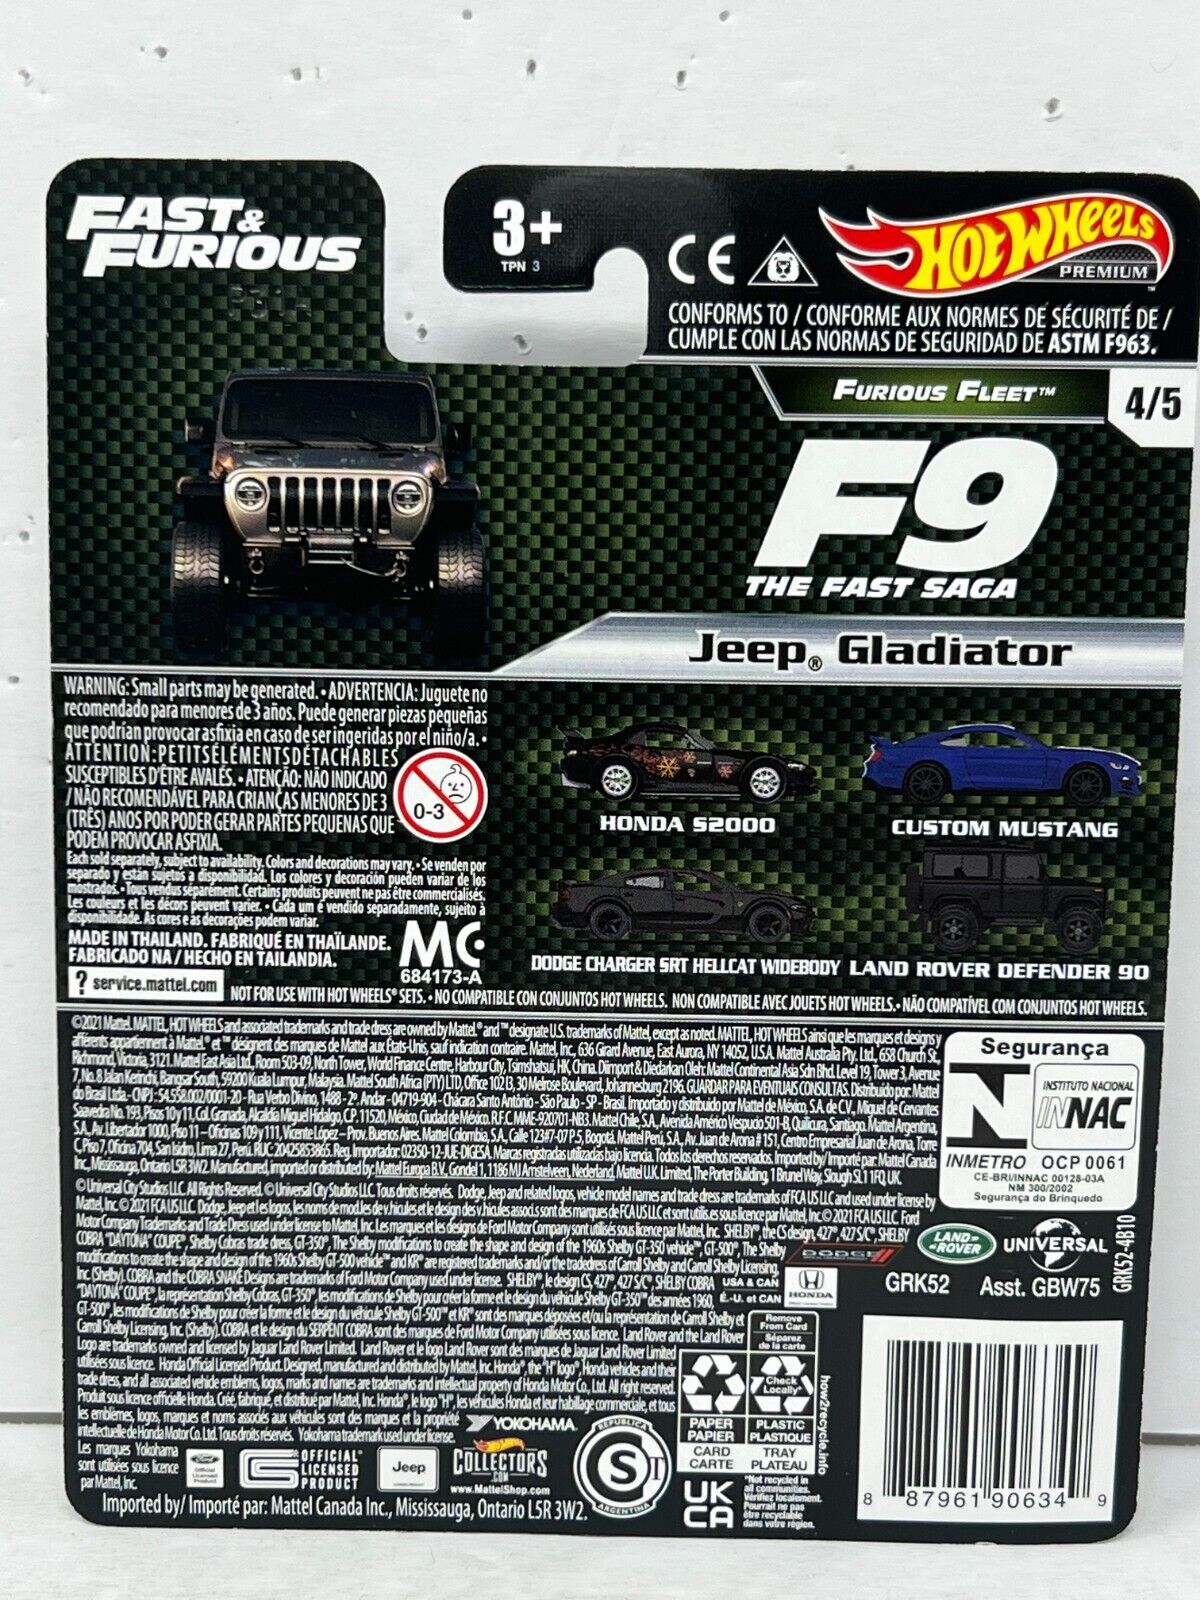 Hot Wheels Premium Fast & Furious Furious Fleet Jeep Gladiator 1:64 Diecast